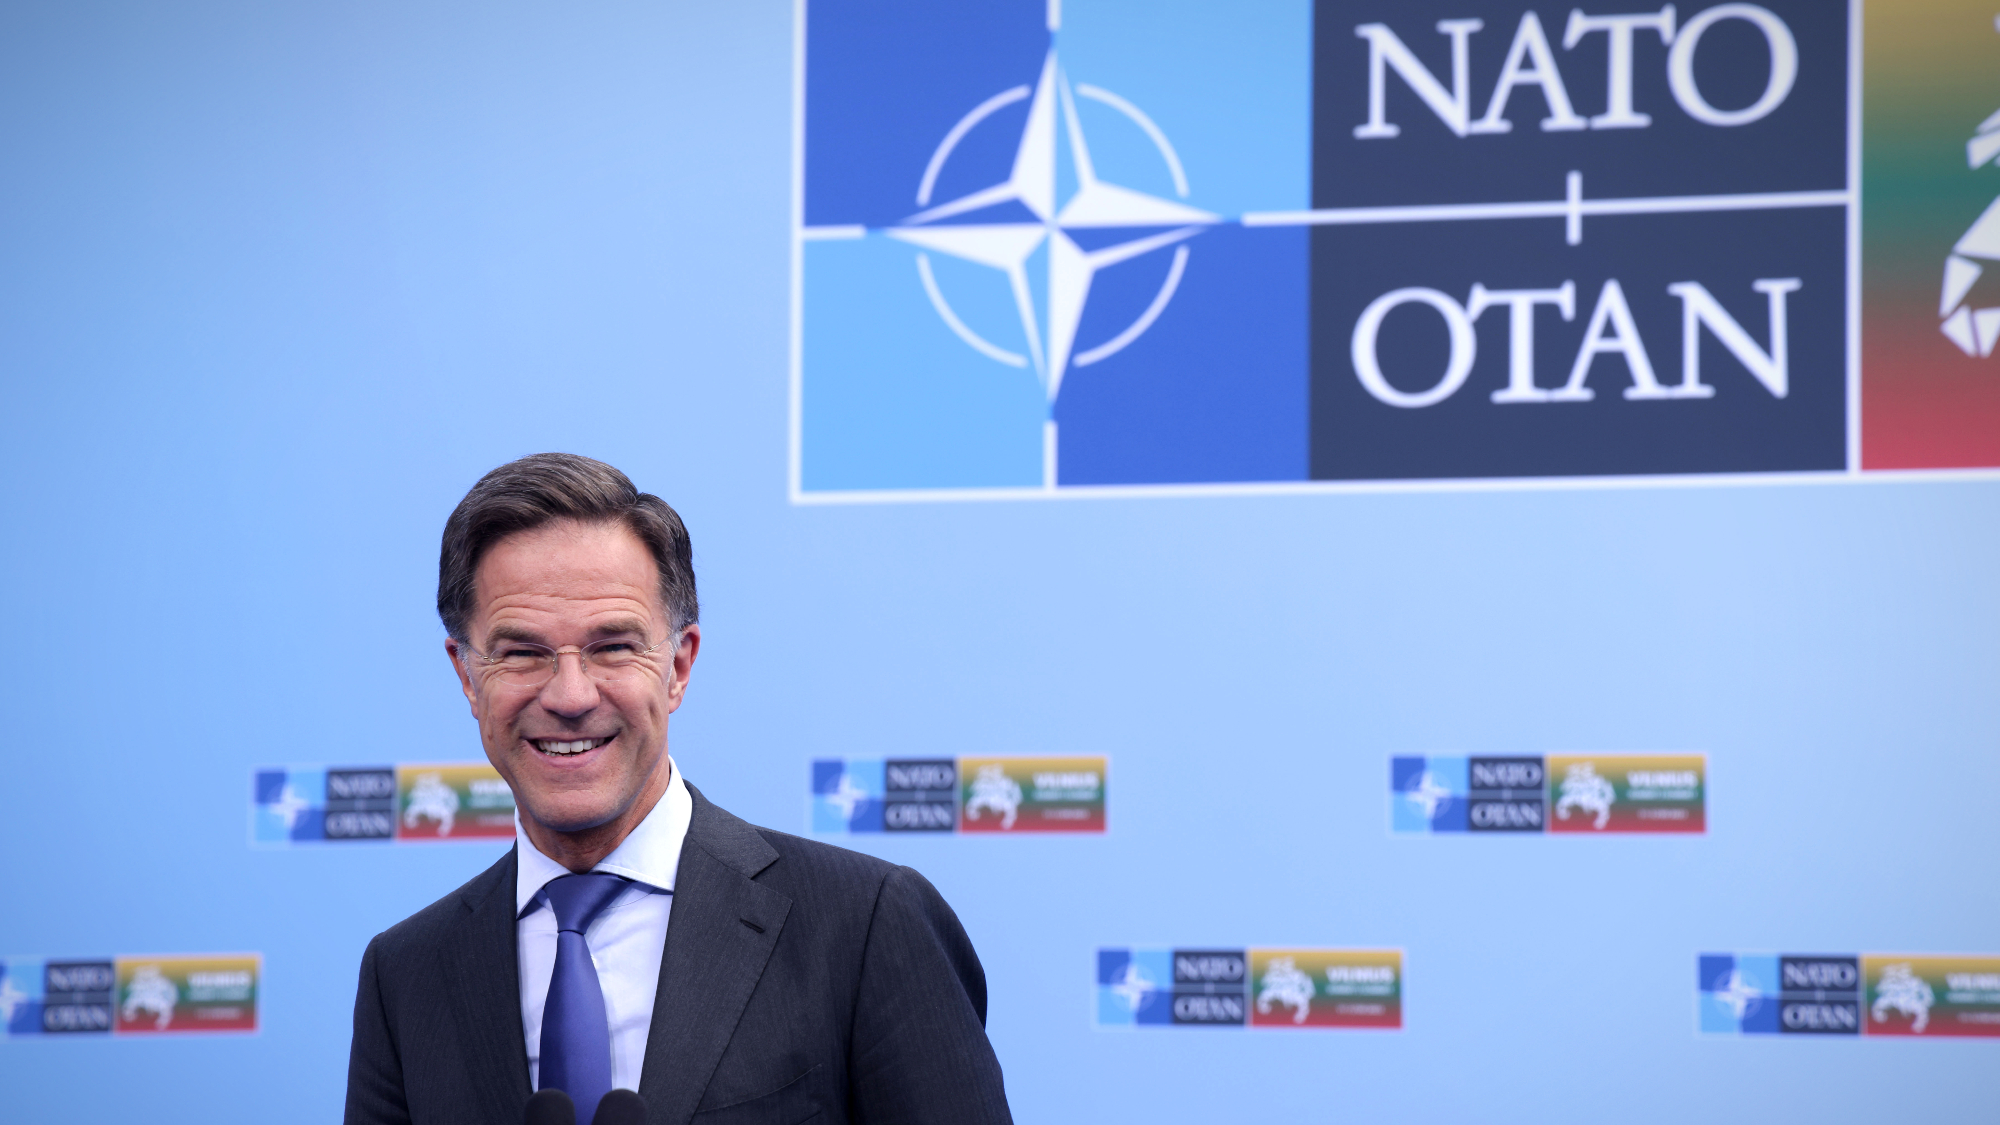  Dutch leader Mark Rutte to be next NATO chief 